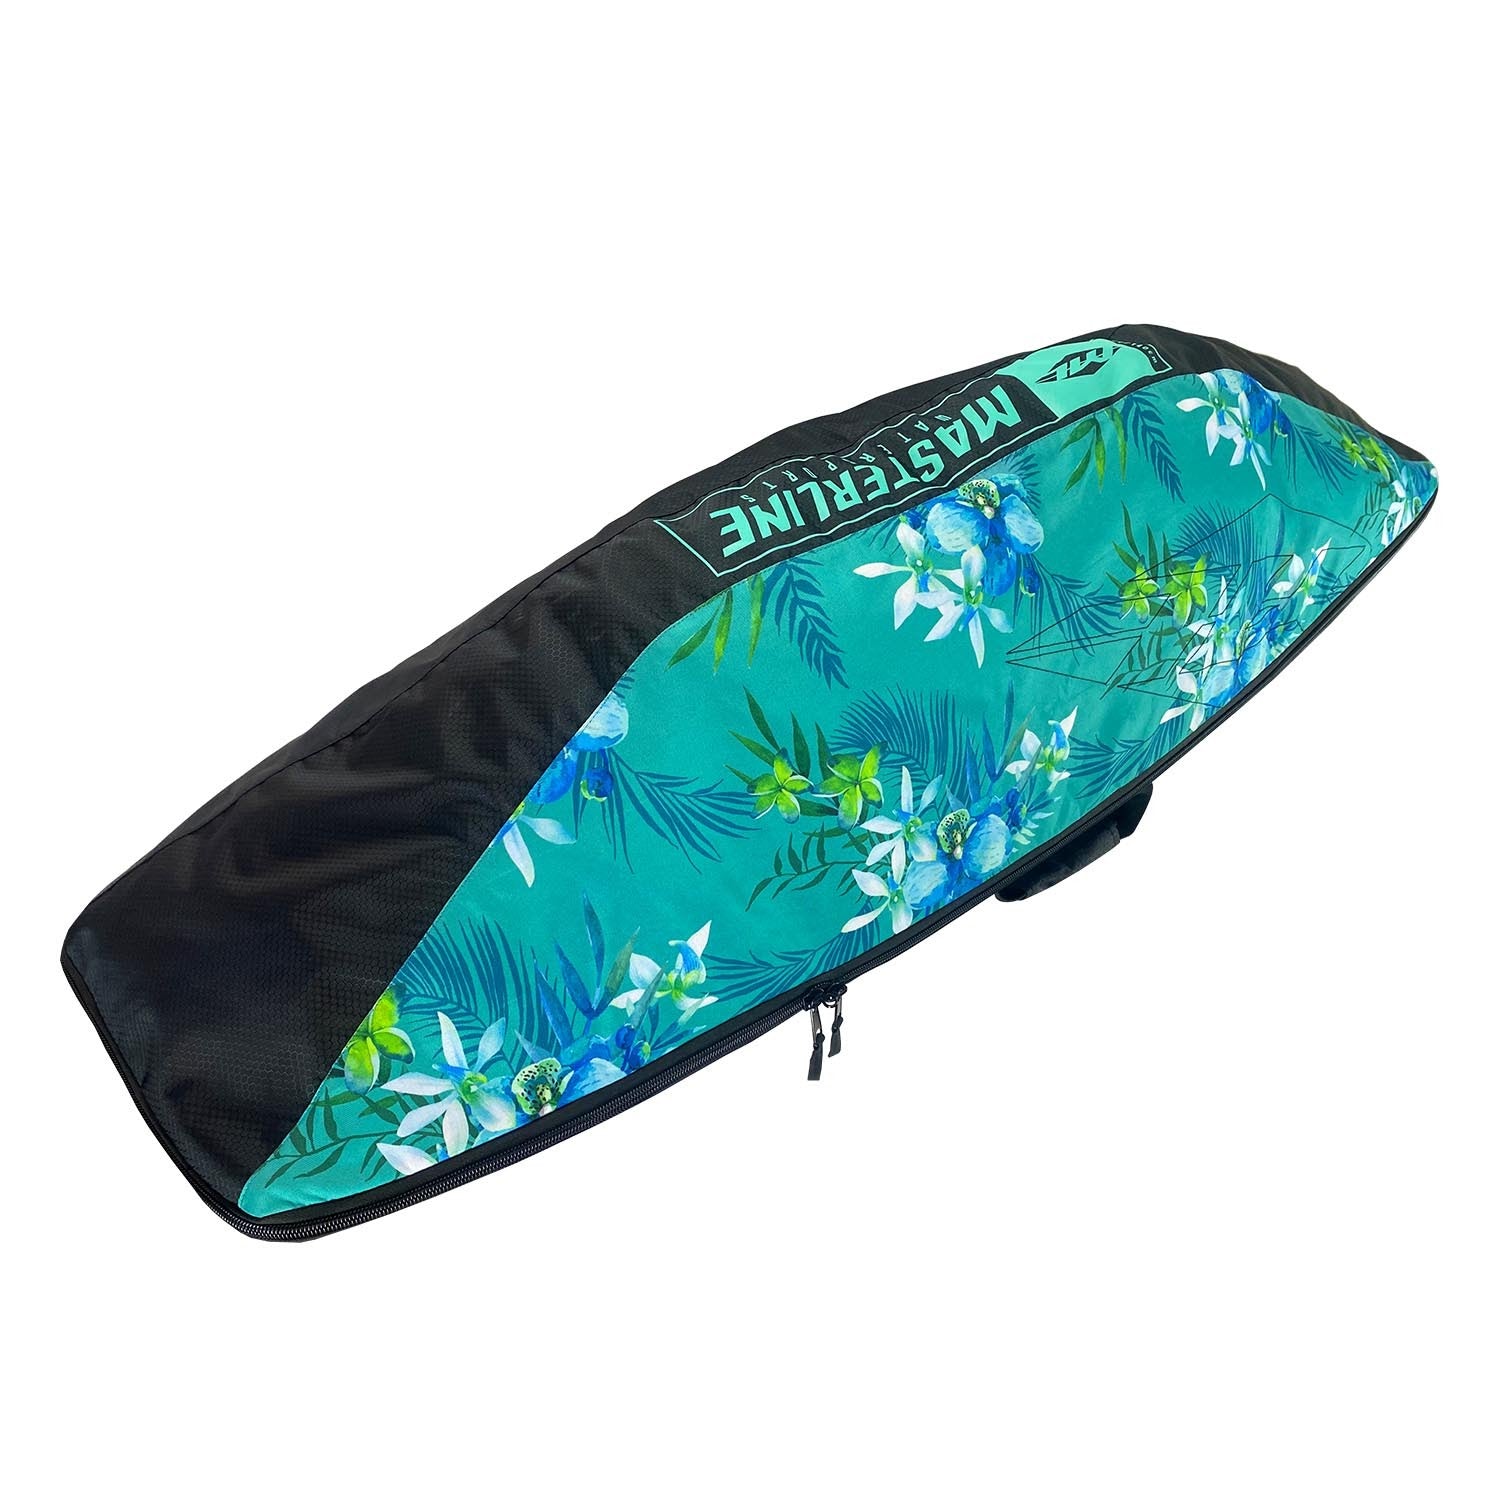 Masterline 120/140cm Women's Wakeboard Bag